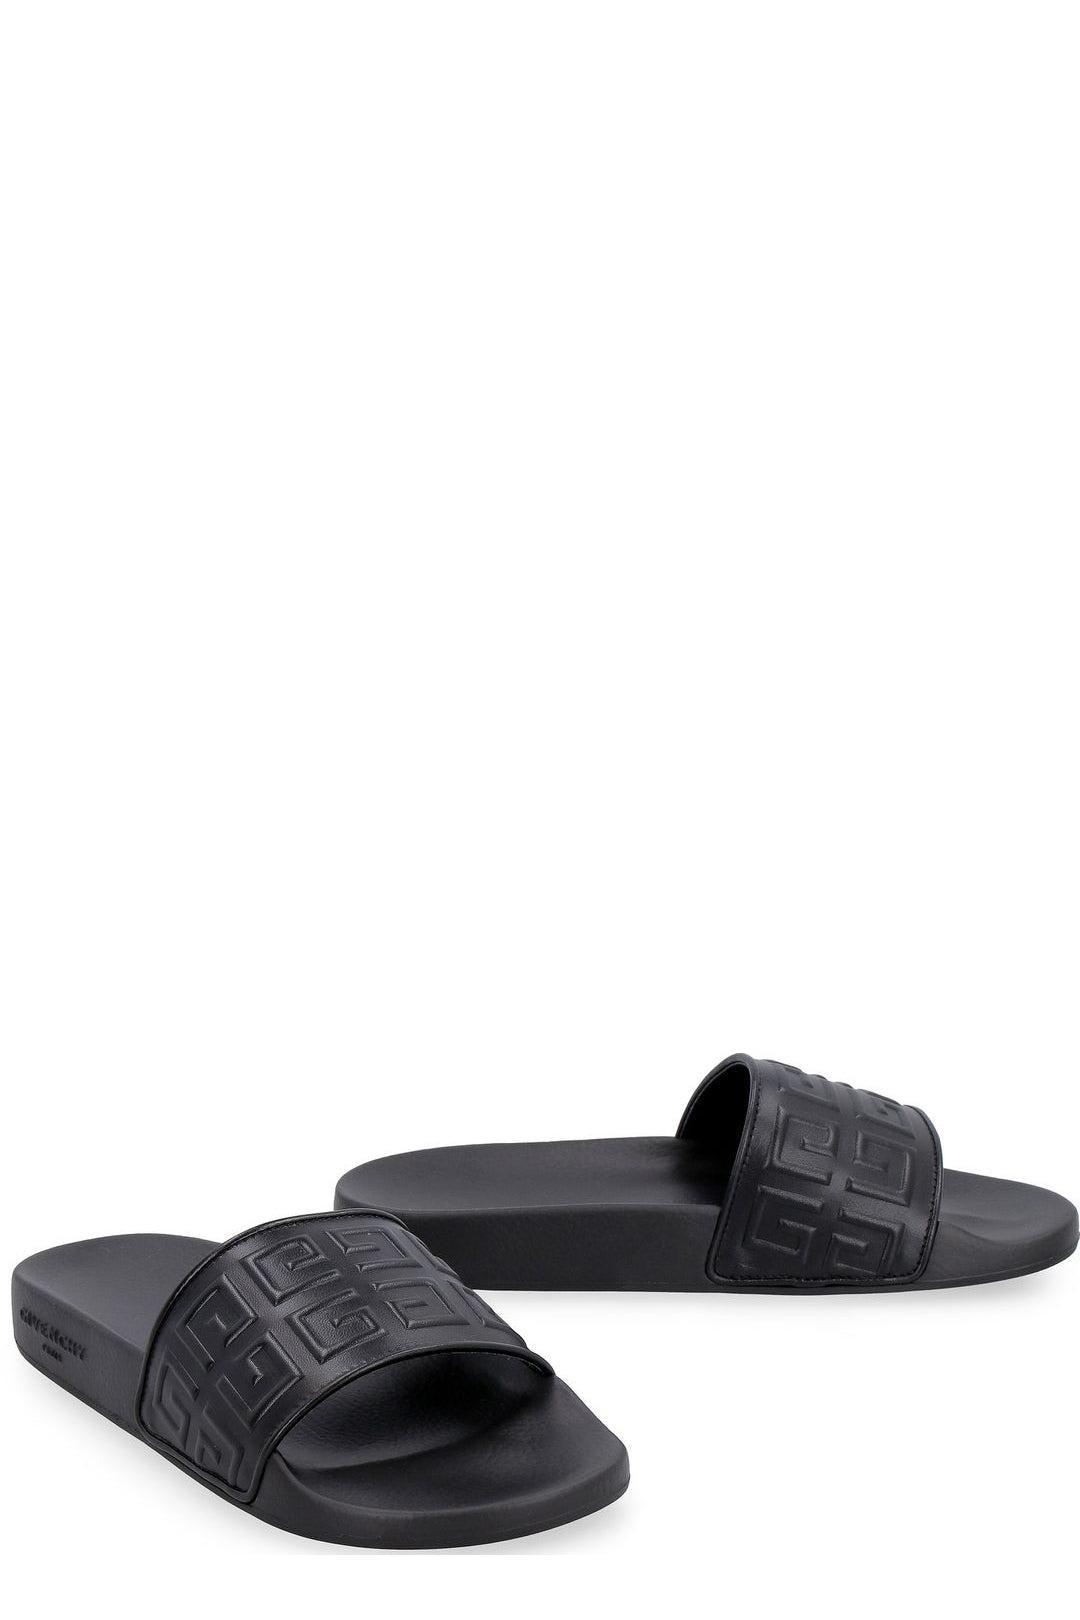 Givenchy 4g Logo Embossed Slip-on Sandals in Black | Lyst